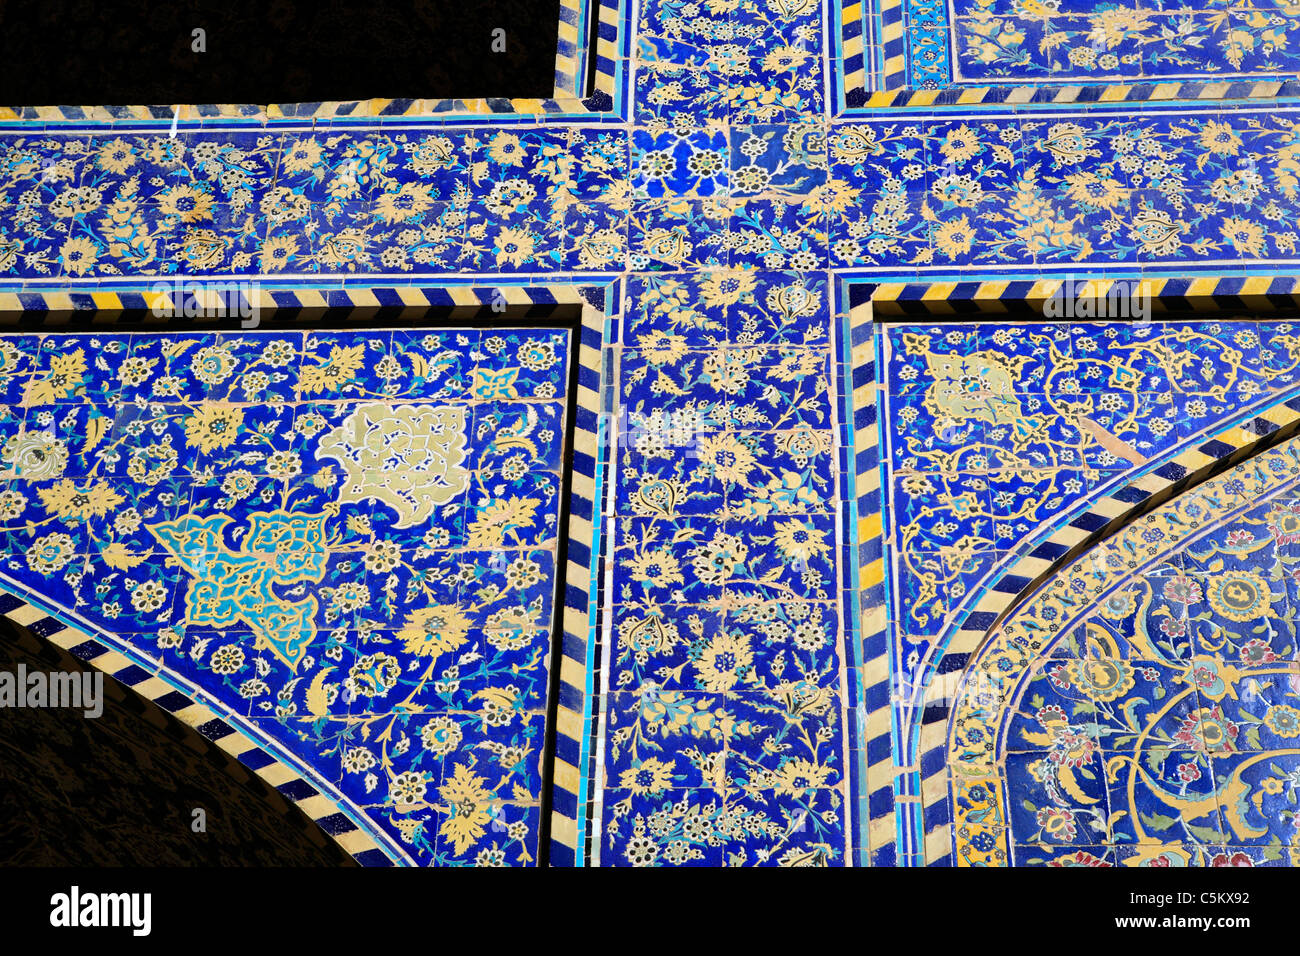 Imam (former Shah) mosque (1612-1630), Isfahan, Iran Stock Photo